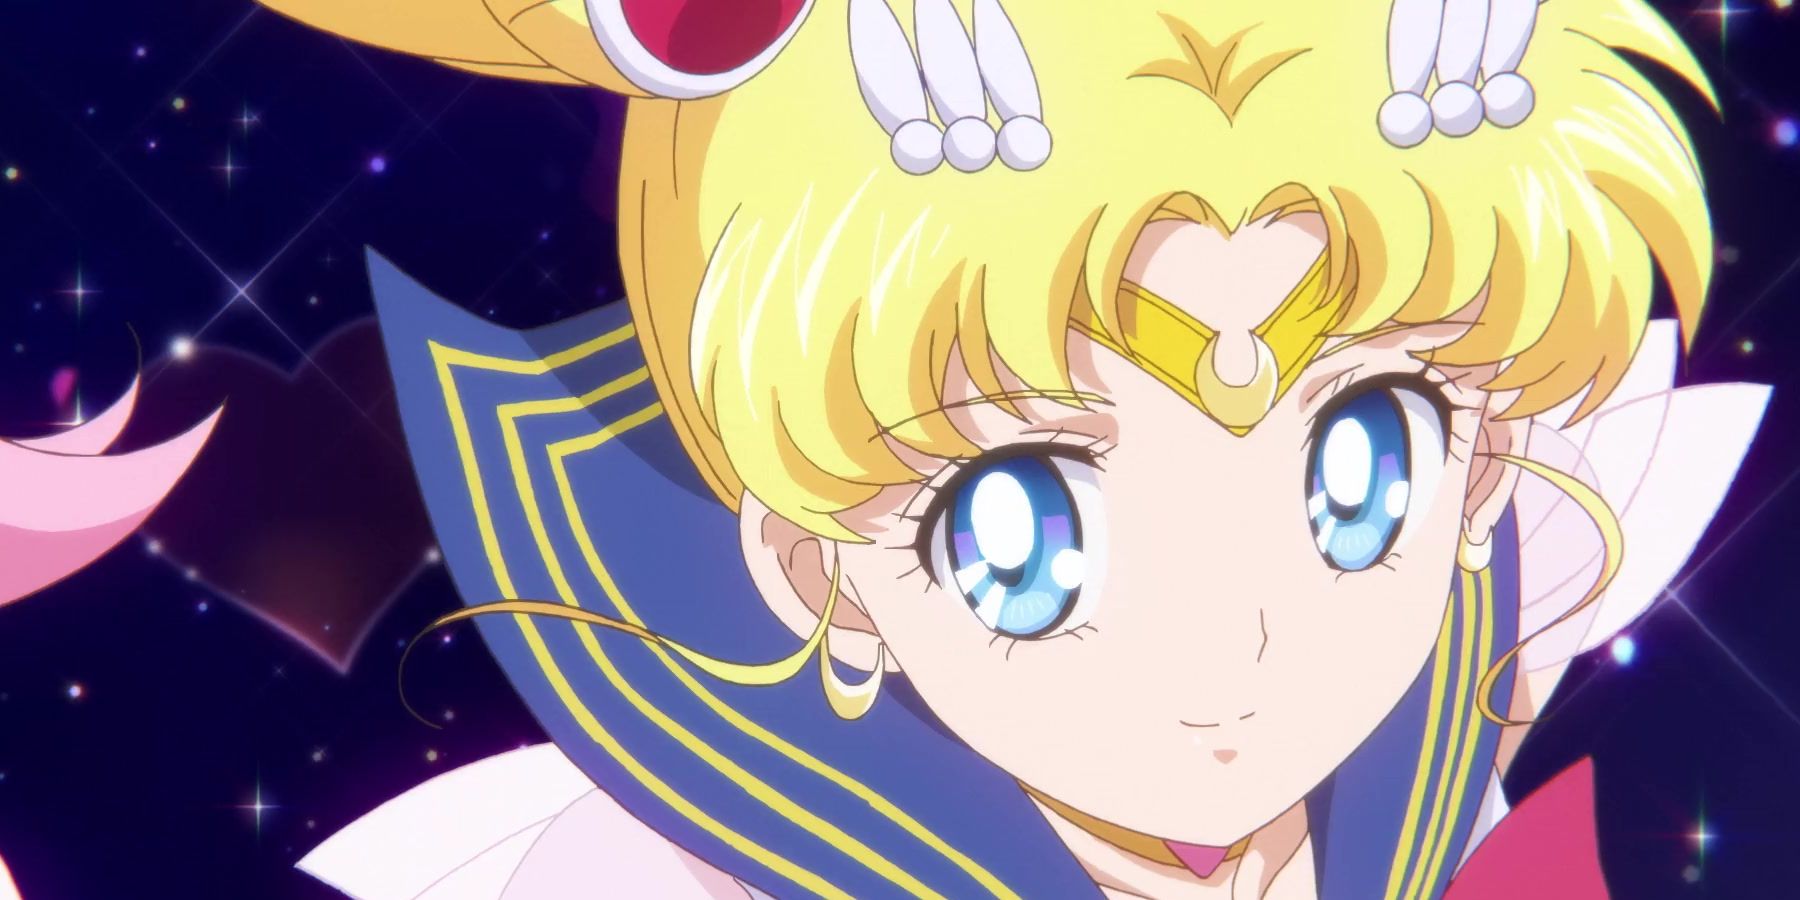 Jimmy Choo x Sailor Moon 30th Anniversary Collaboration